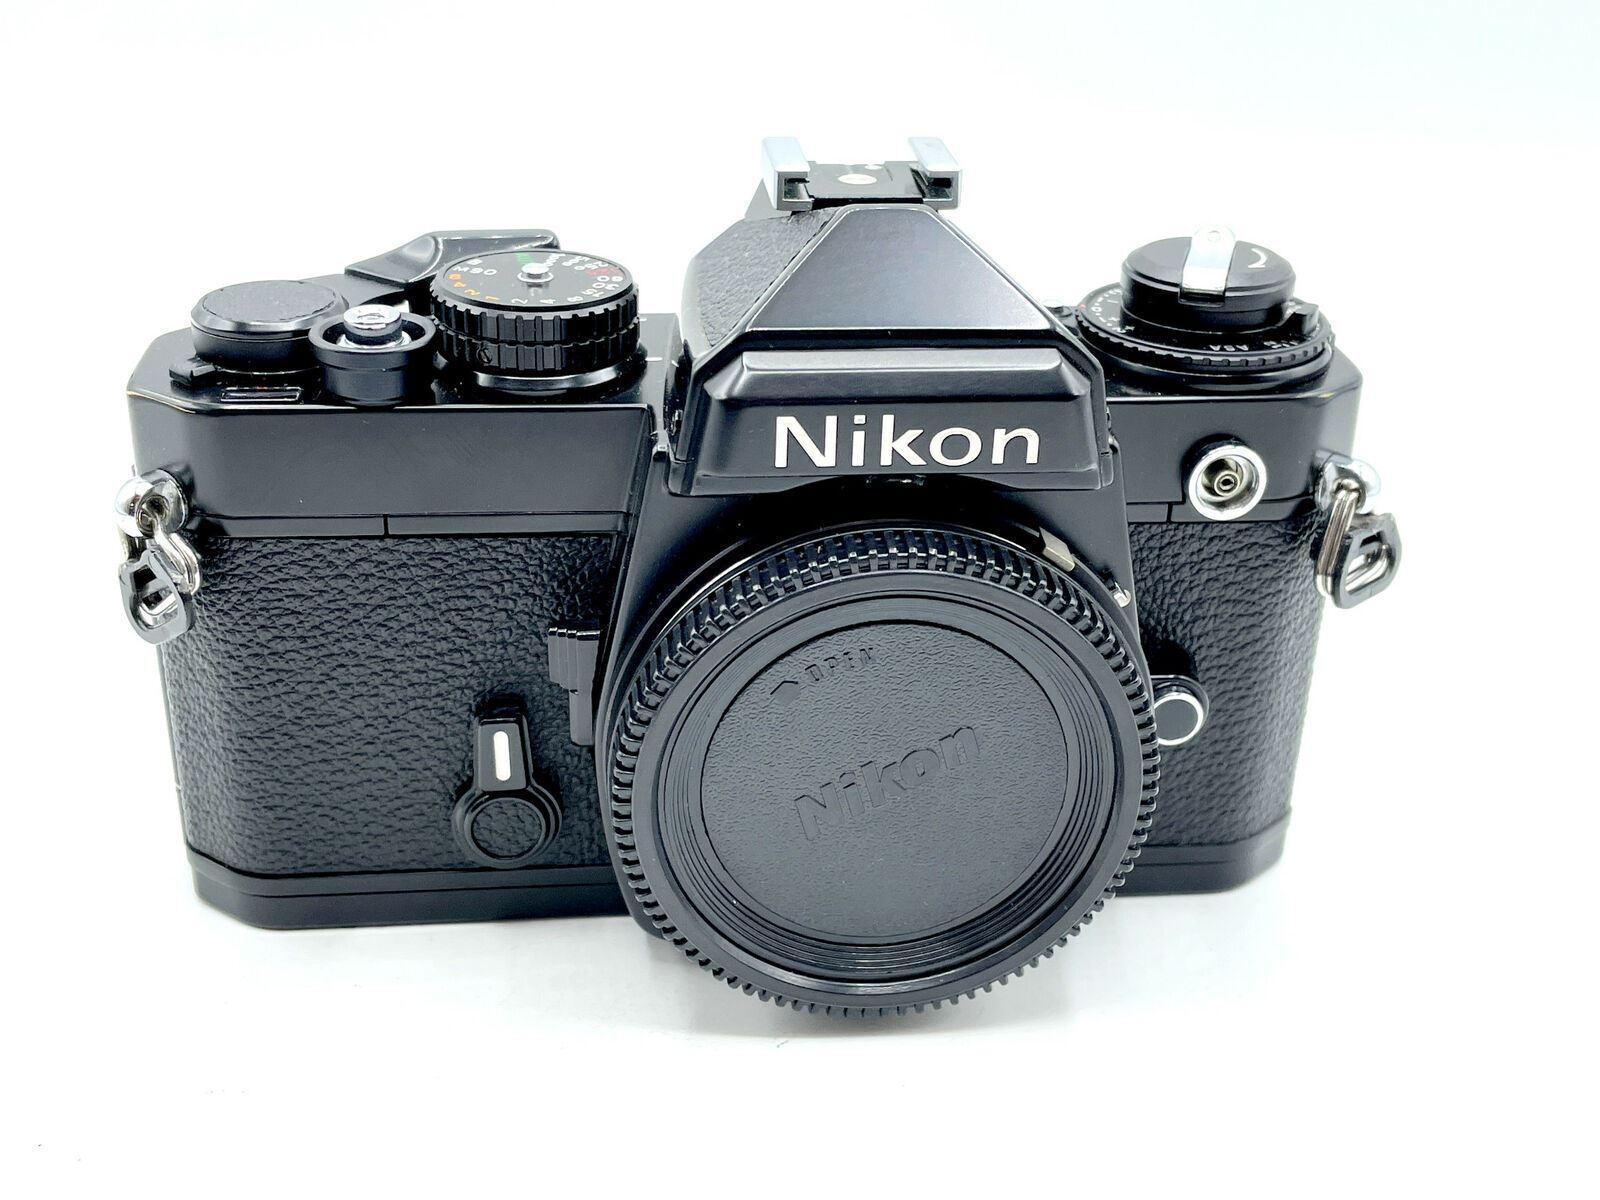 Nikon FE SLR film camera body; choice of Chrome and Black color - Very Nice